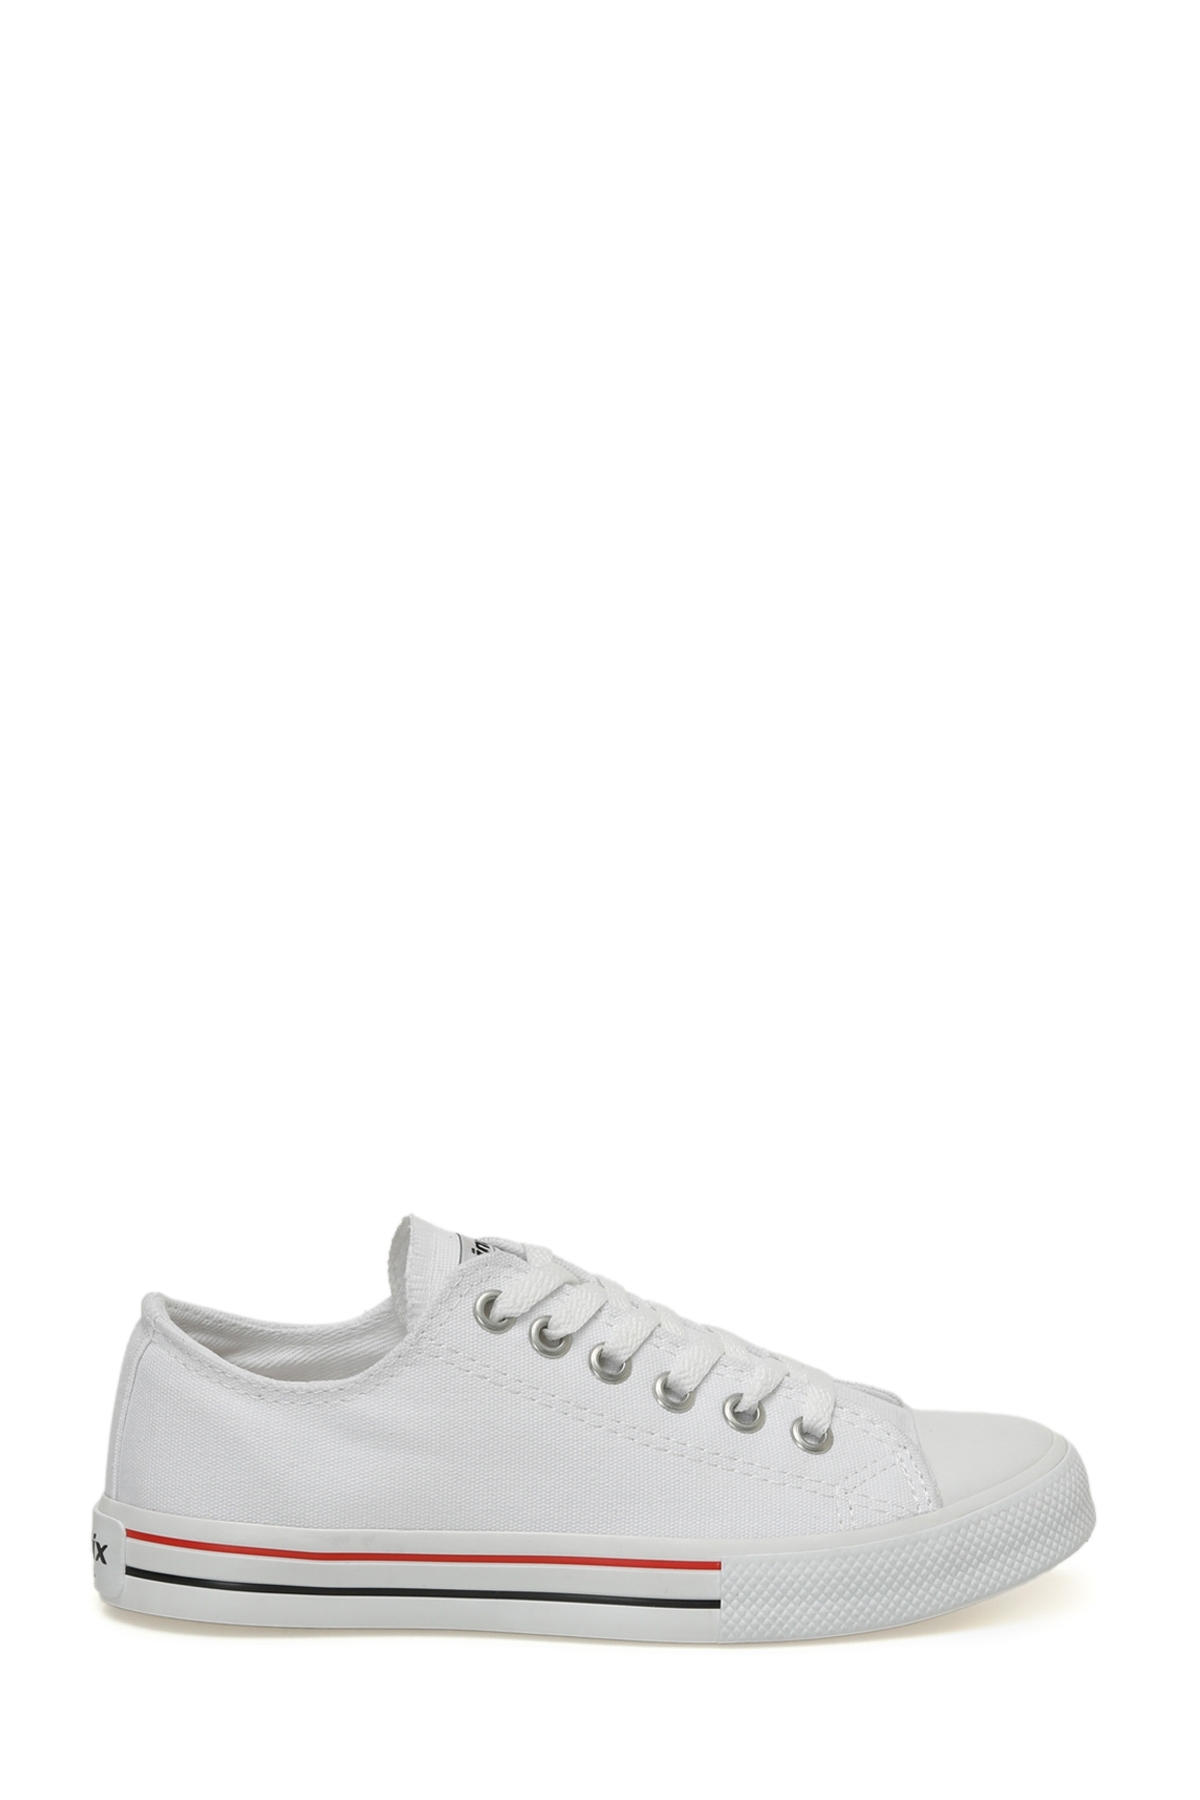 KINETIX SABLE W 4FX White Women's Sneaker